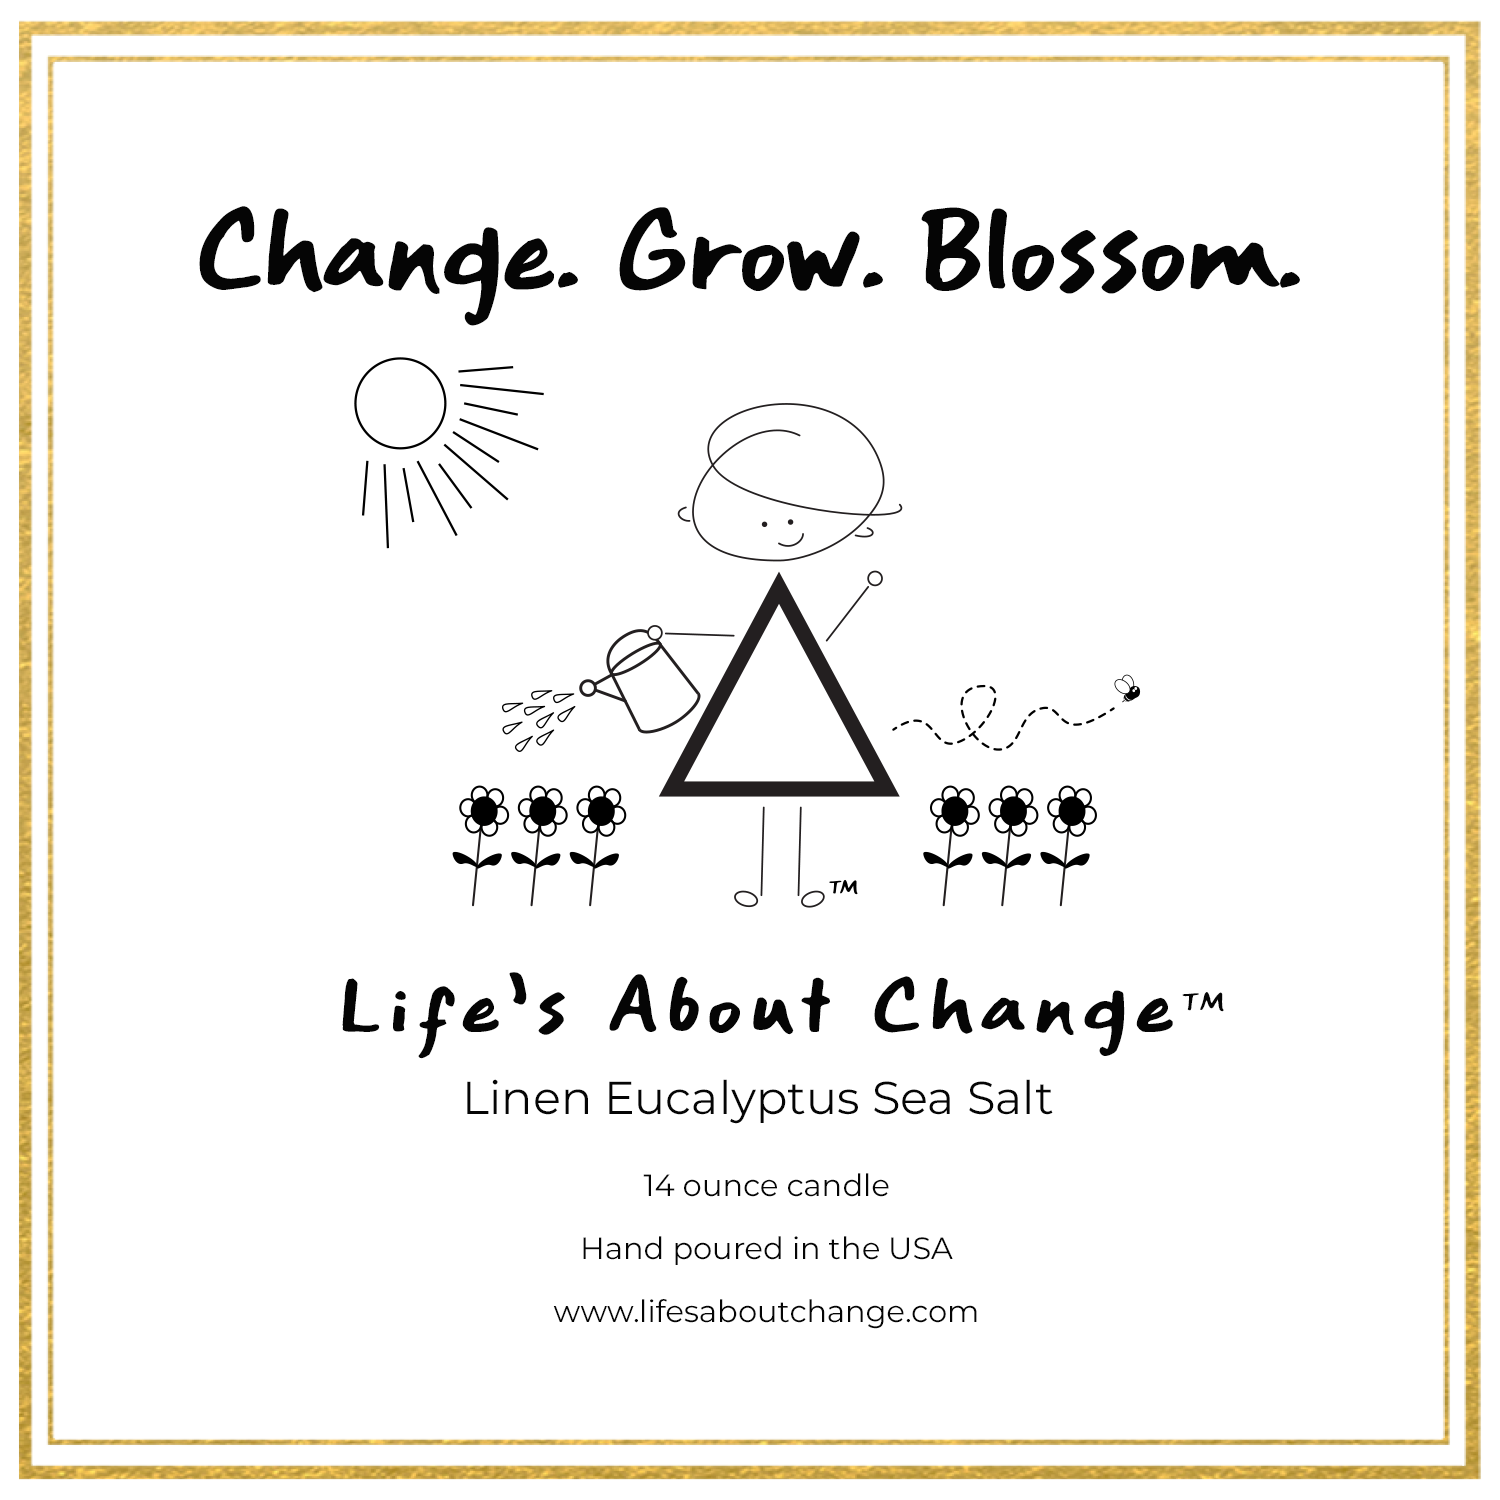 Change. Grow. Blossom.